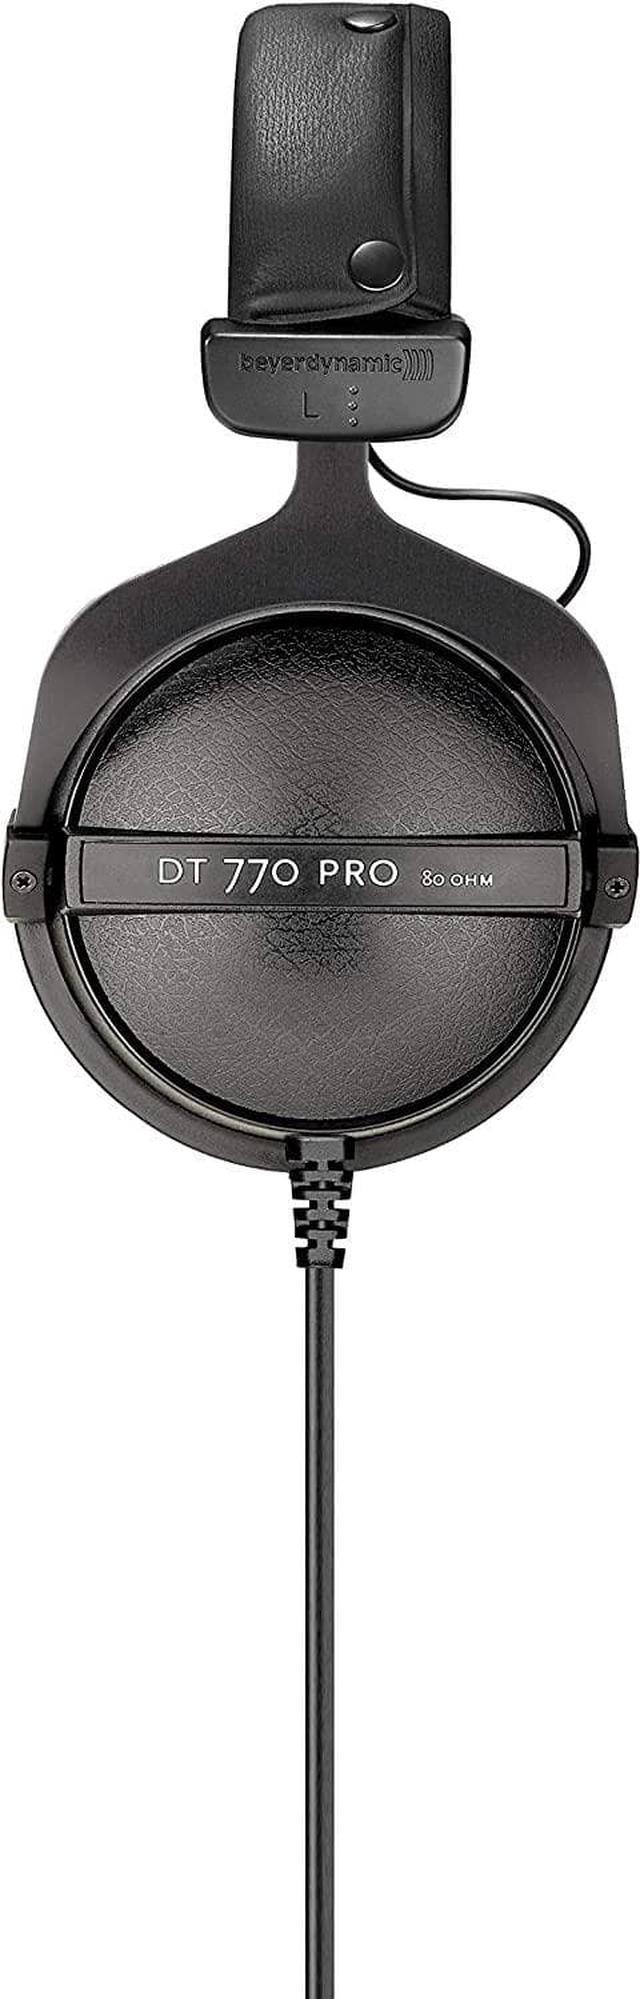 Beyerdynamic DT 770 Pro 80 Ohm Headphones with Splitter and 3-Year Warranty  